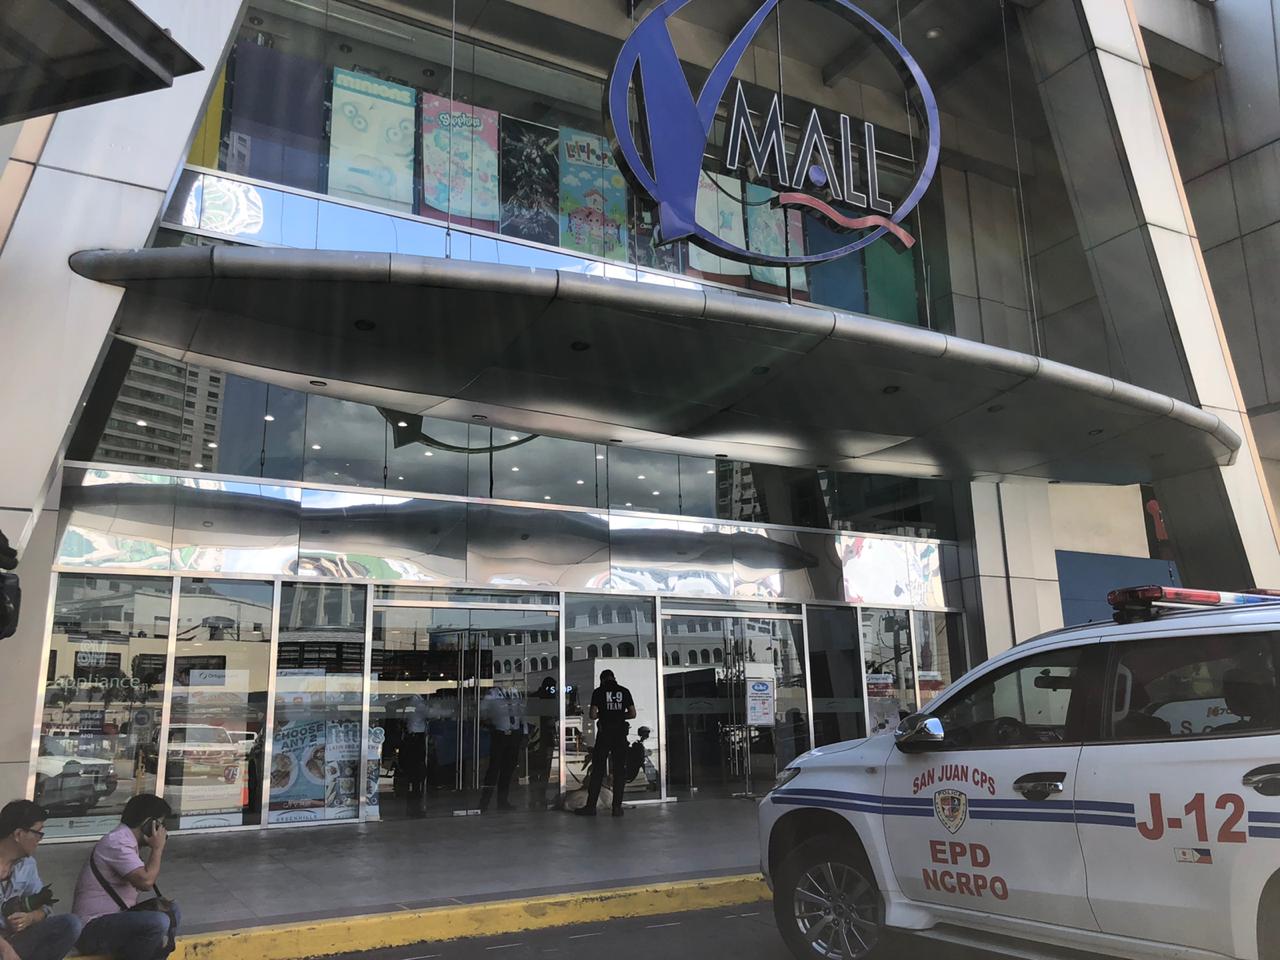 Hostage taking at Virra Mall in Greenhills, San Juan City 8